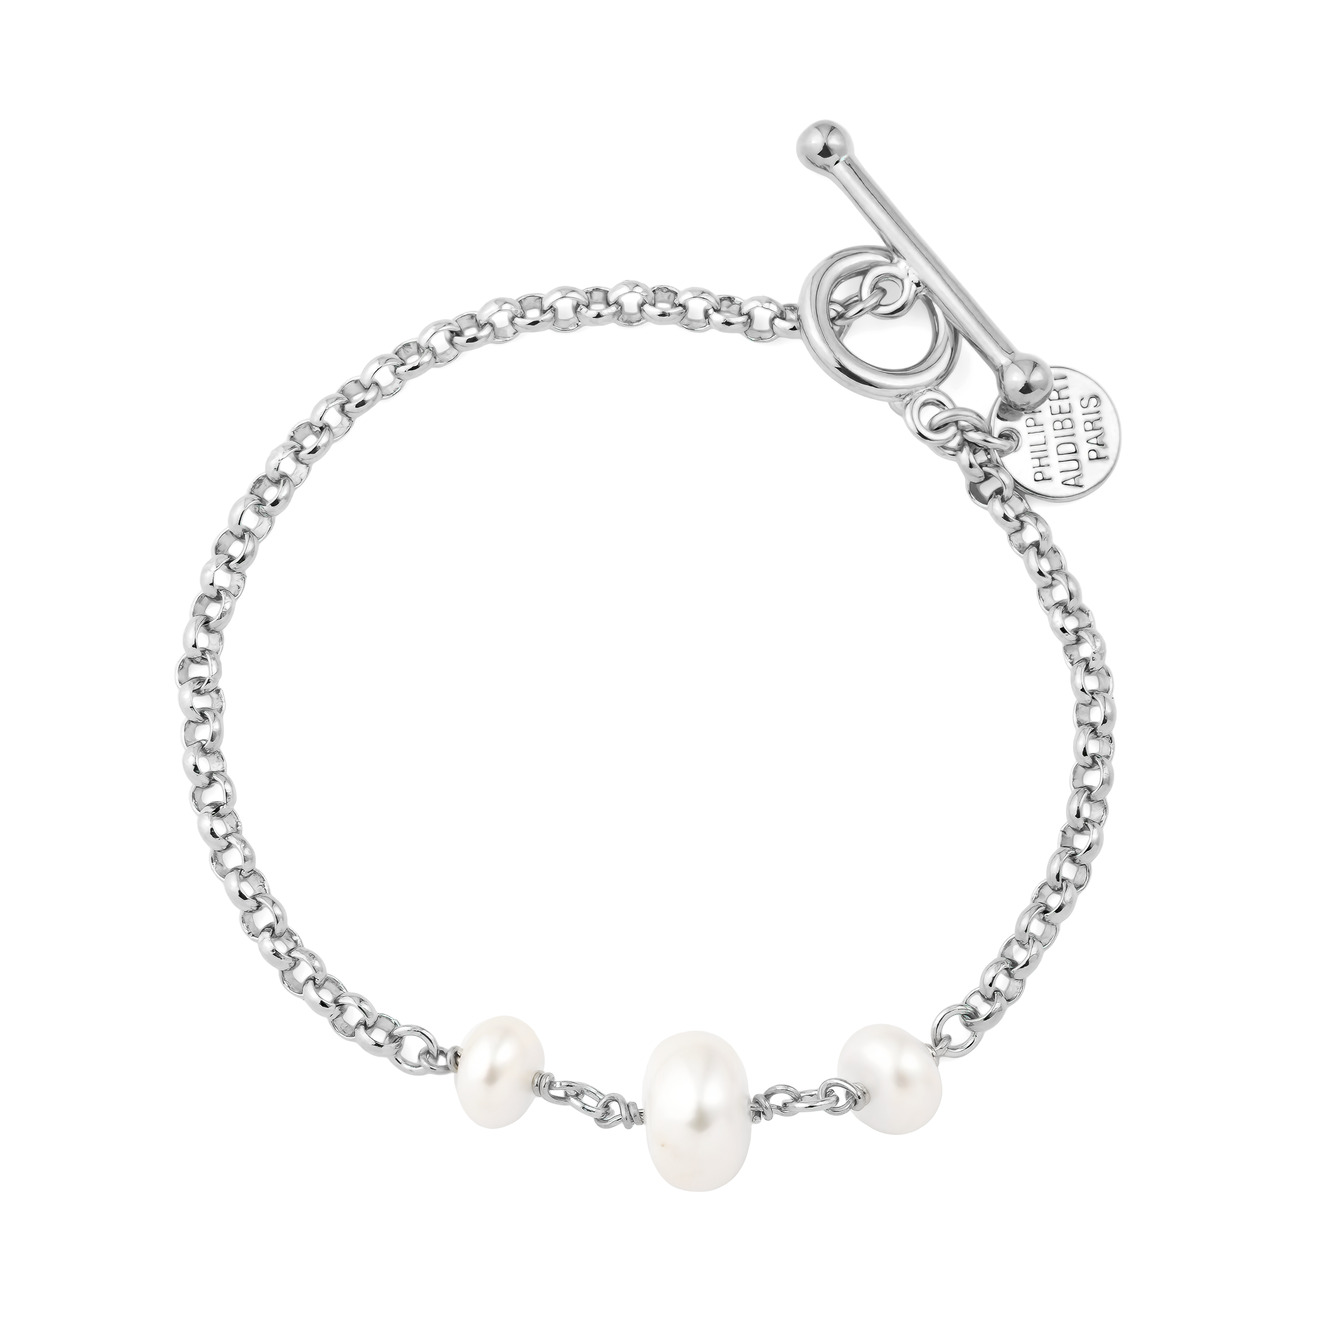 Philippe Audibert Браслет Pia pearl chain с серебряным покрытием alexander mcqueen золотистый браслет с жемчужинами chain pearl bracelet